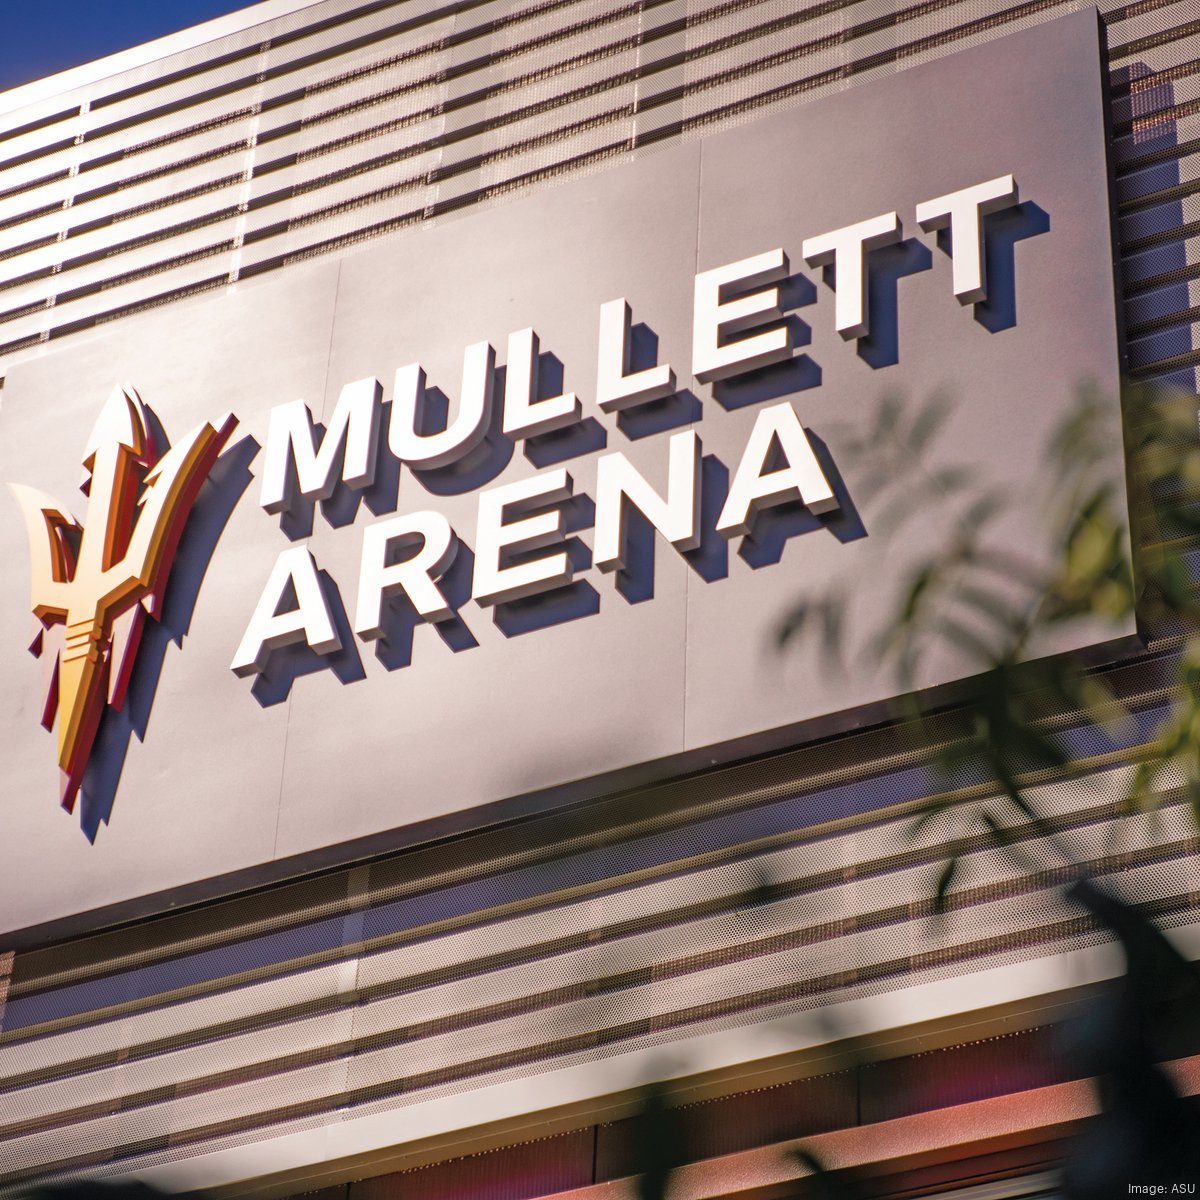 Photos: A look inside Mullett Arena, home of Coyotes, ASU hockey